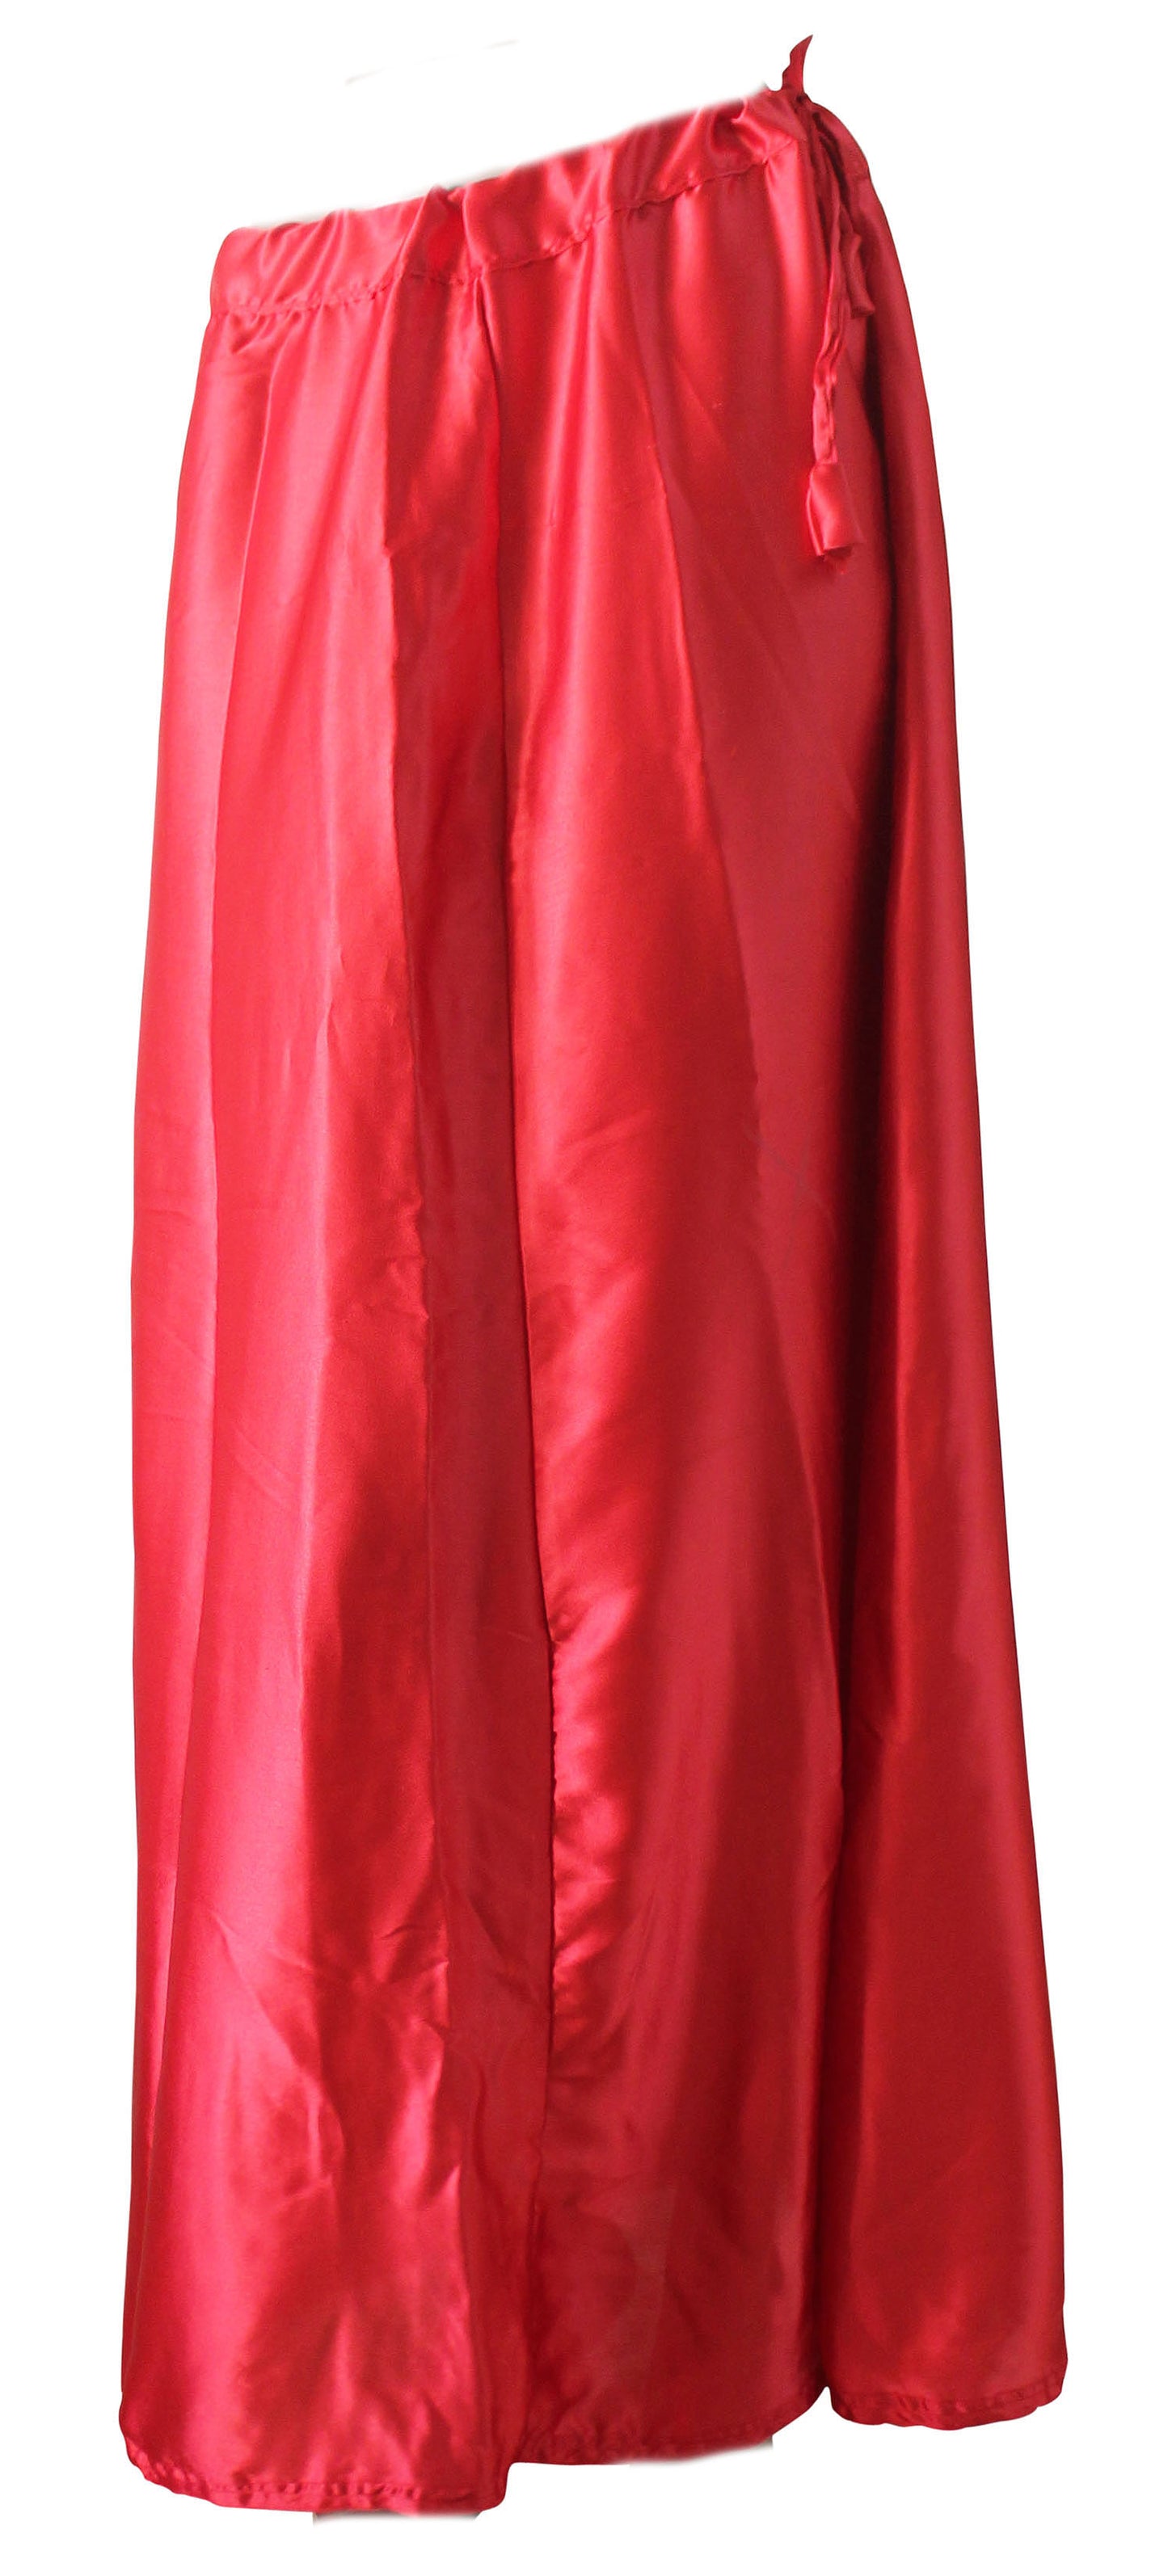 Red  Luxurious soft satin skirt saree Petticoat Underskirt belly dancing  slip